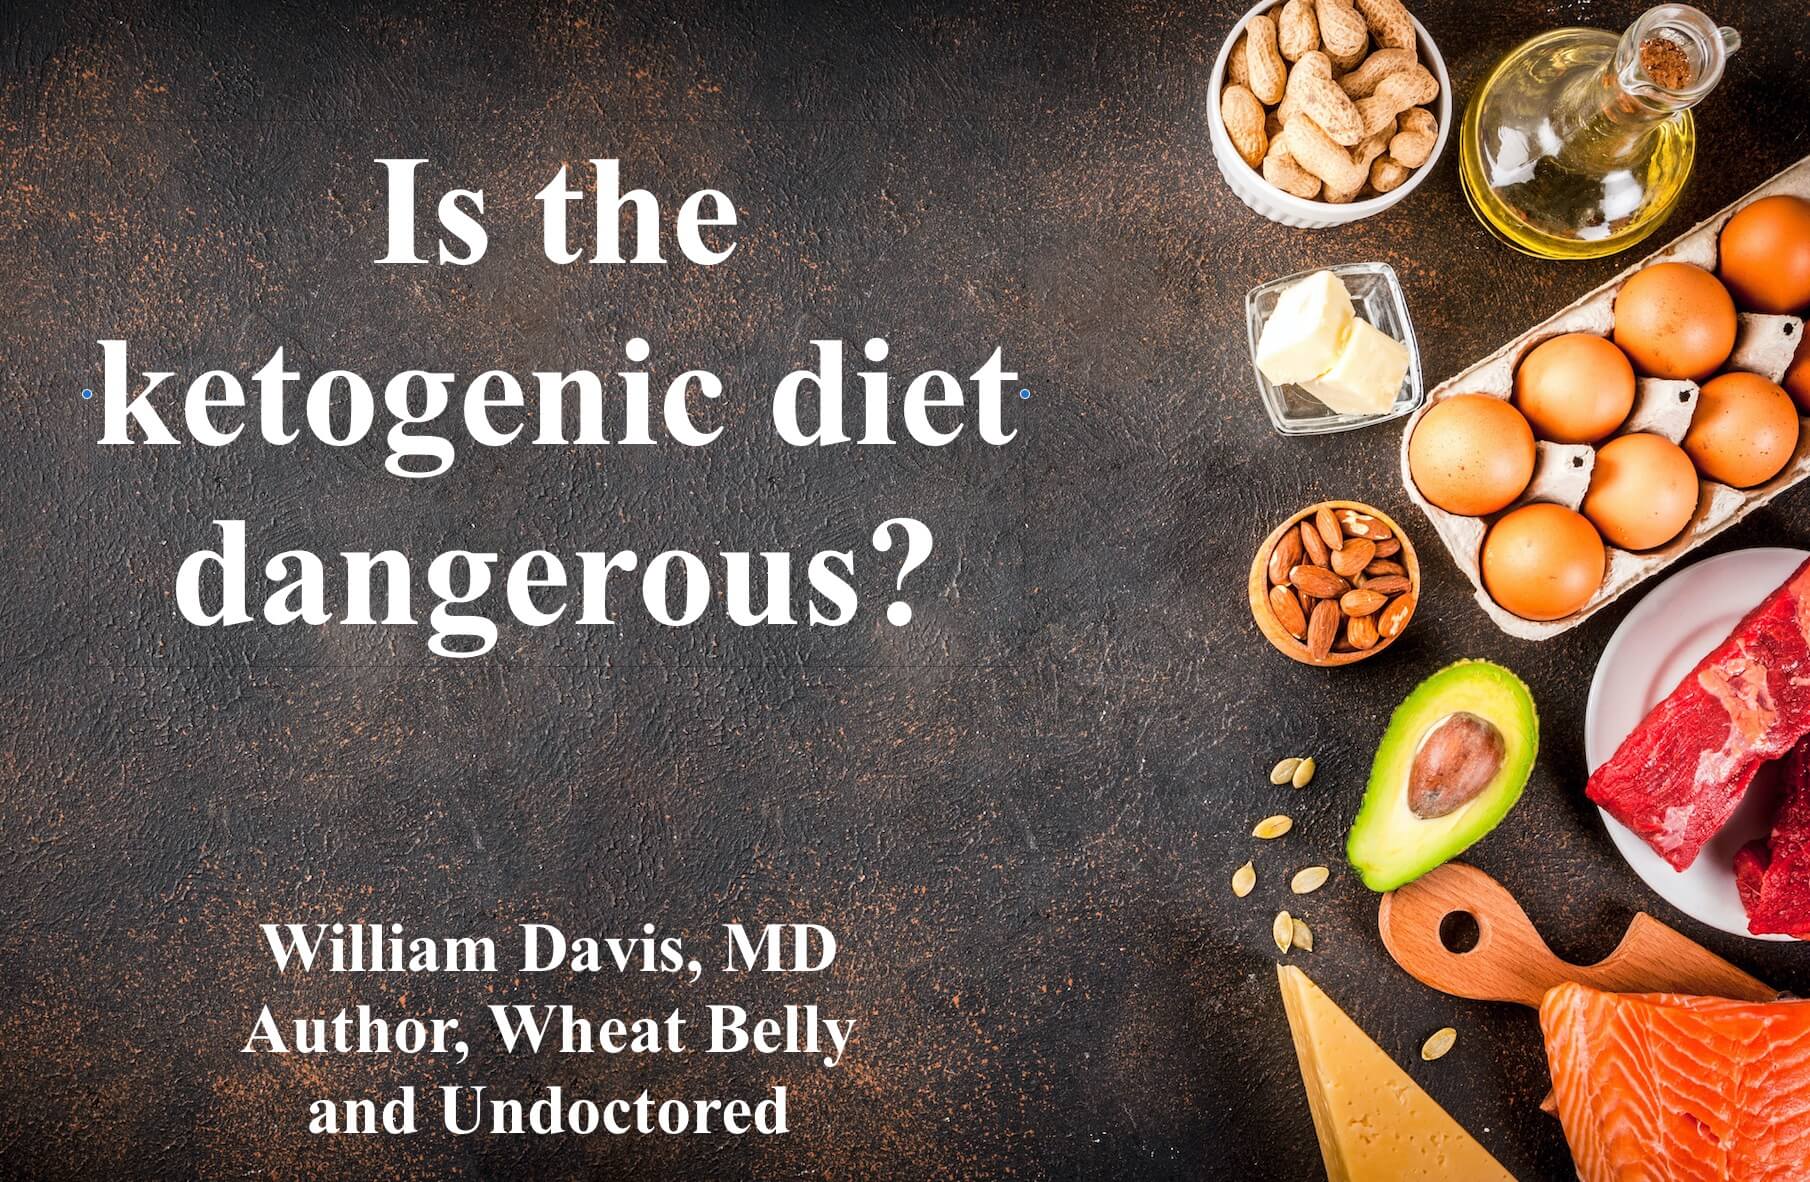 Is the ketogenic diet dangerous?